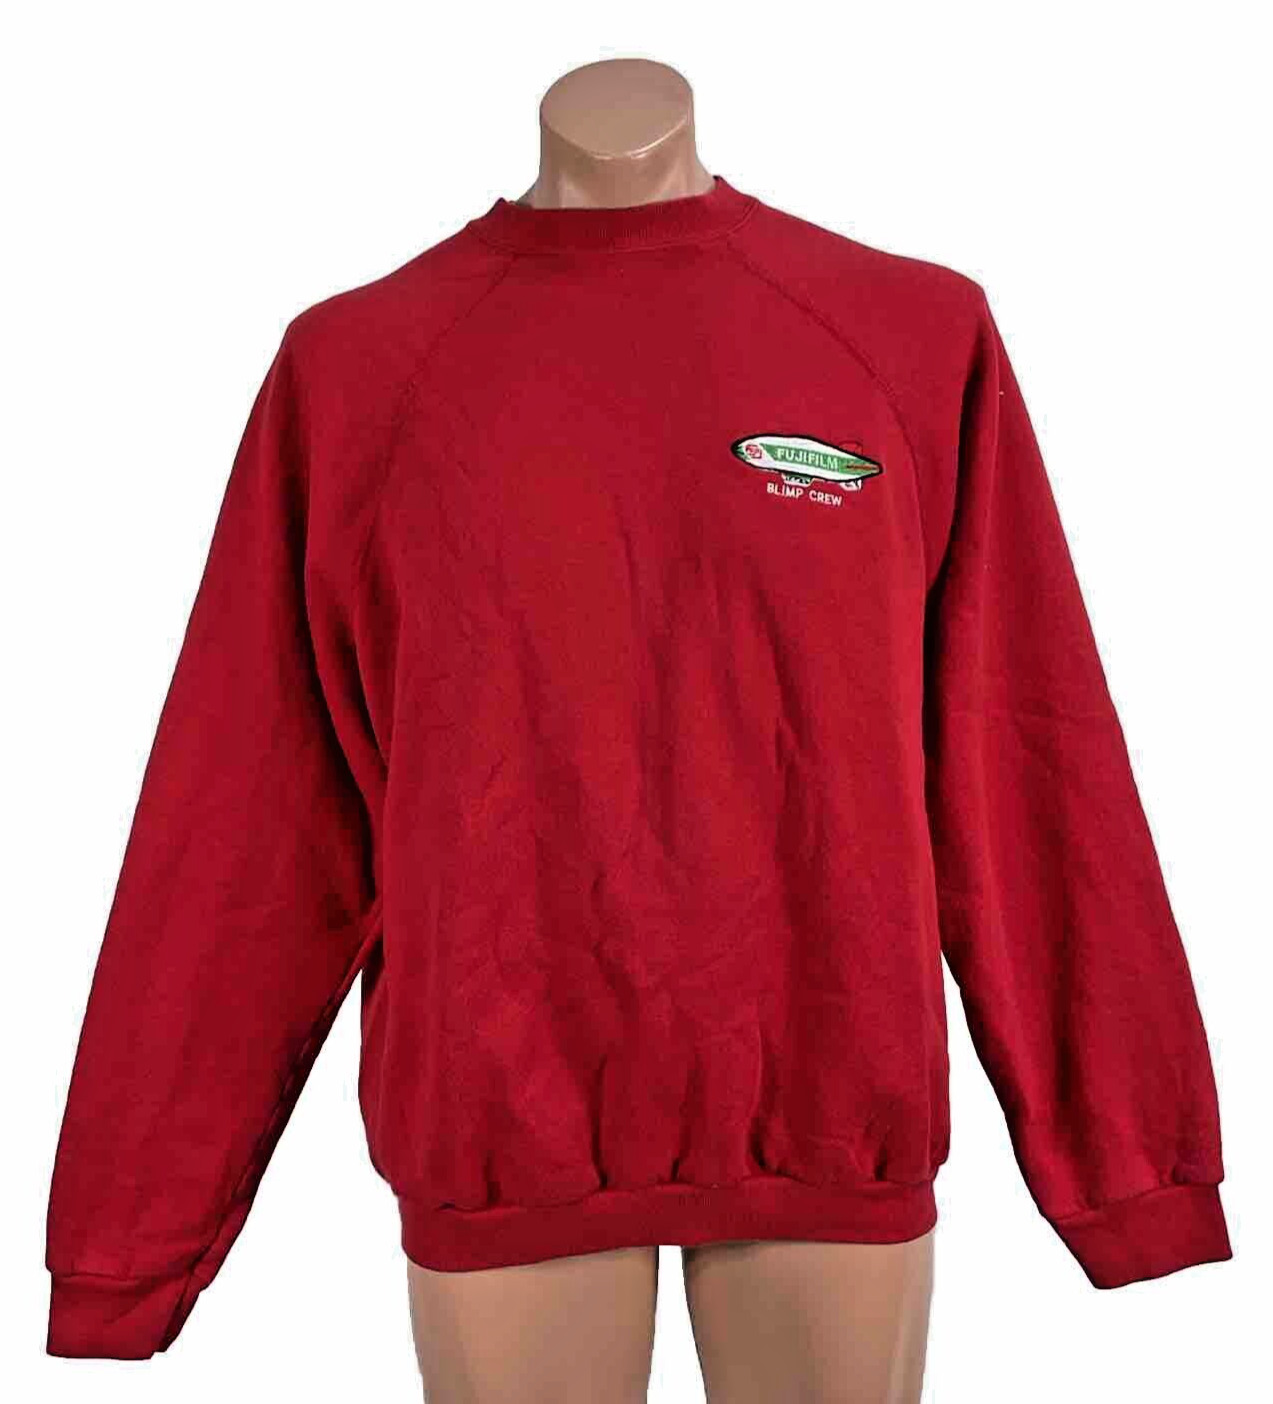 Vintage FUJIFILM Blimp Crew Red Embroidered Advertising Sweatshirt Employee XL